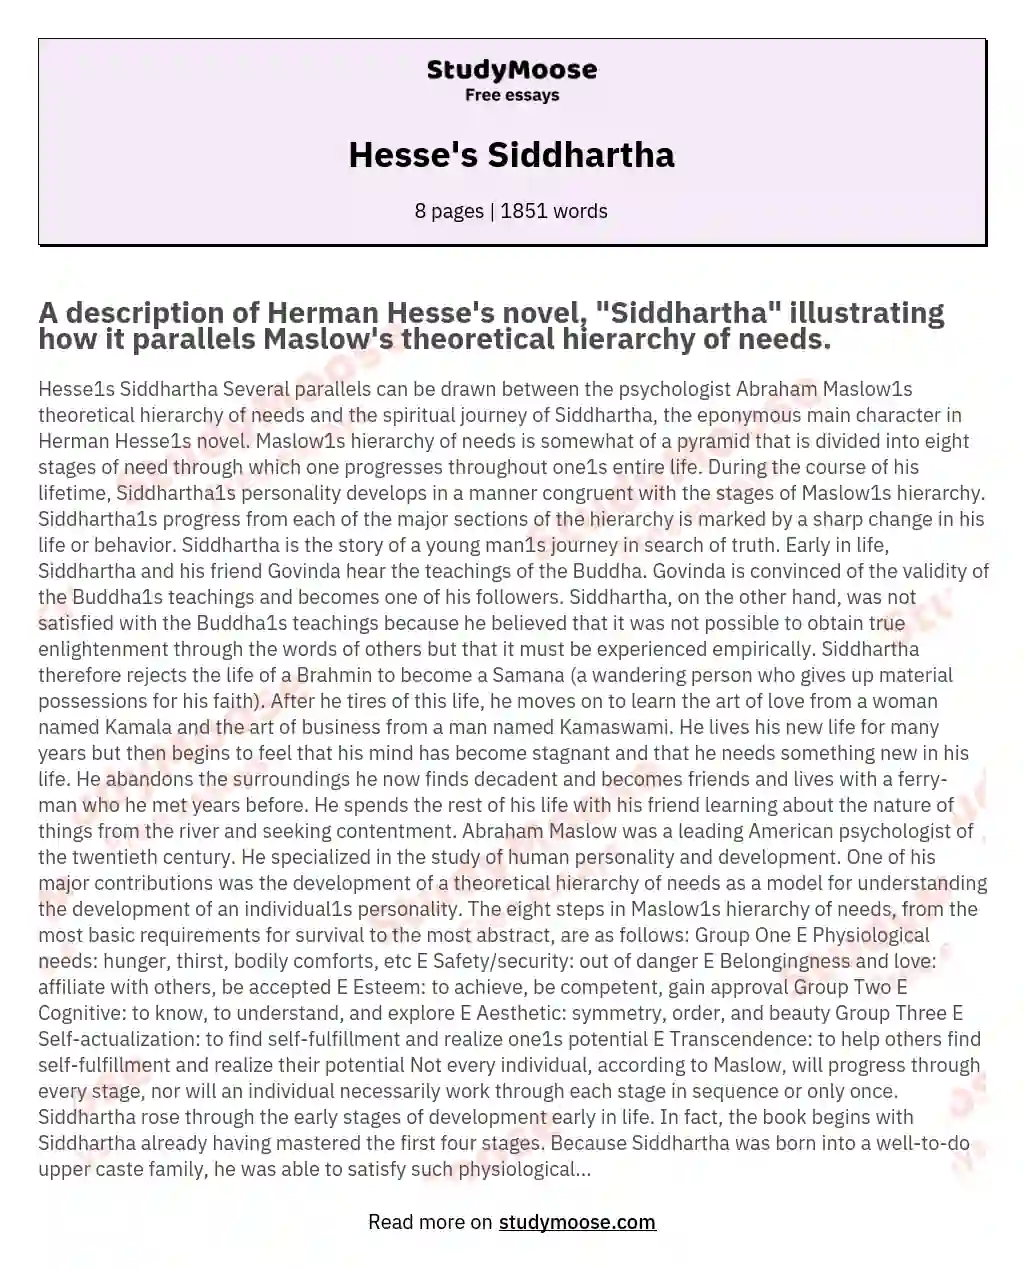 Hesse's Siddhartha essay